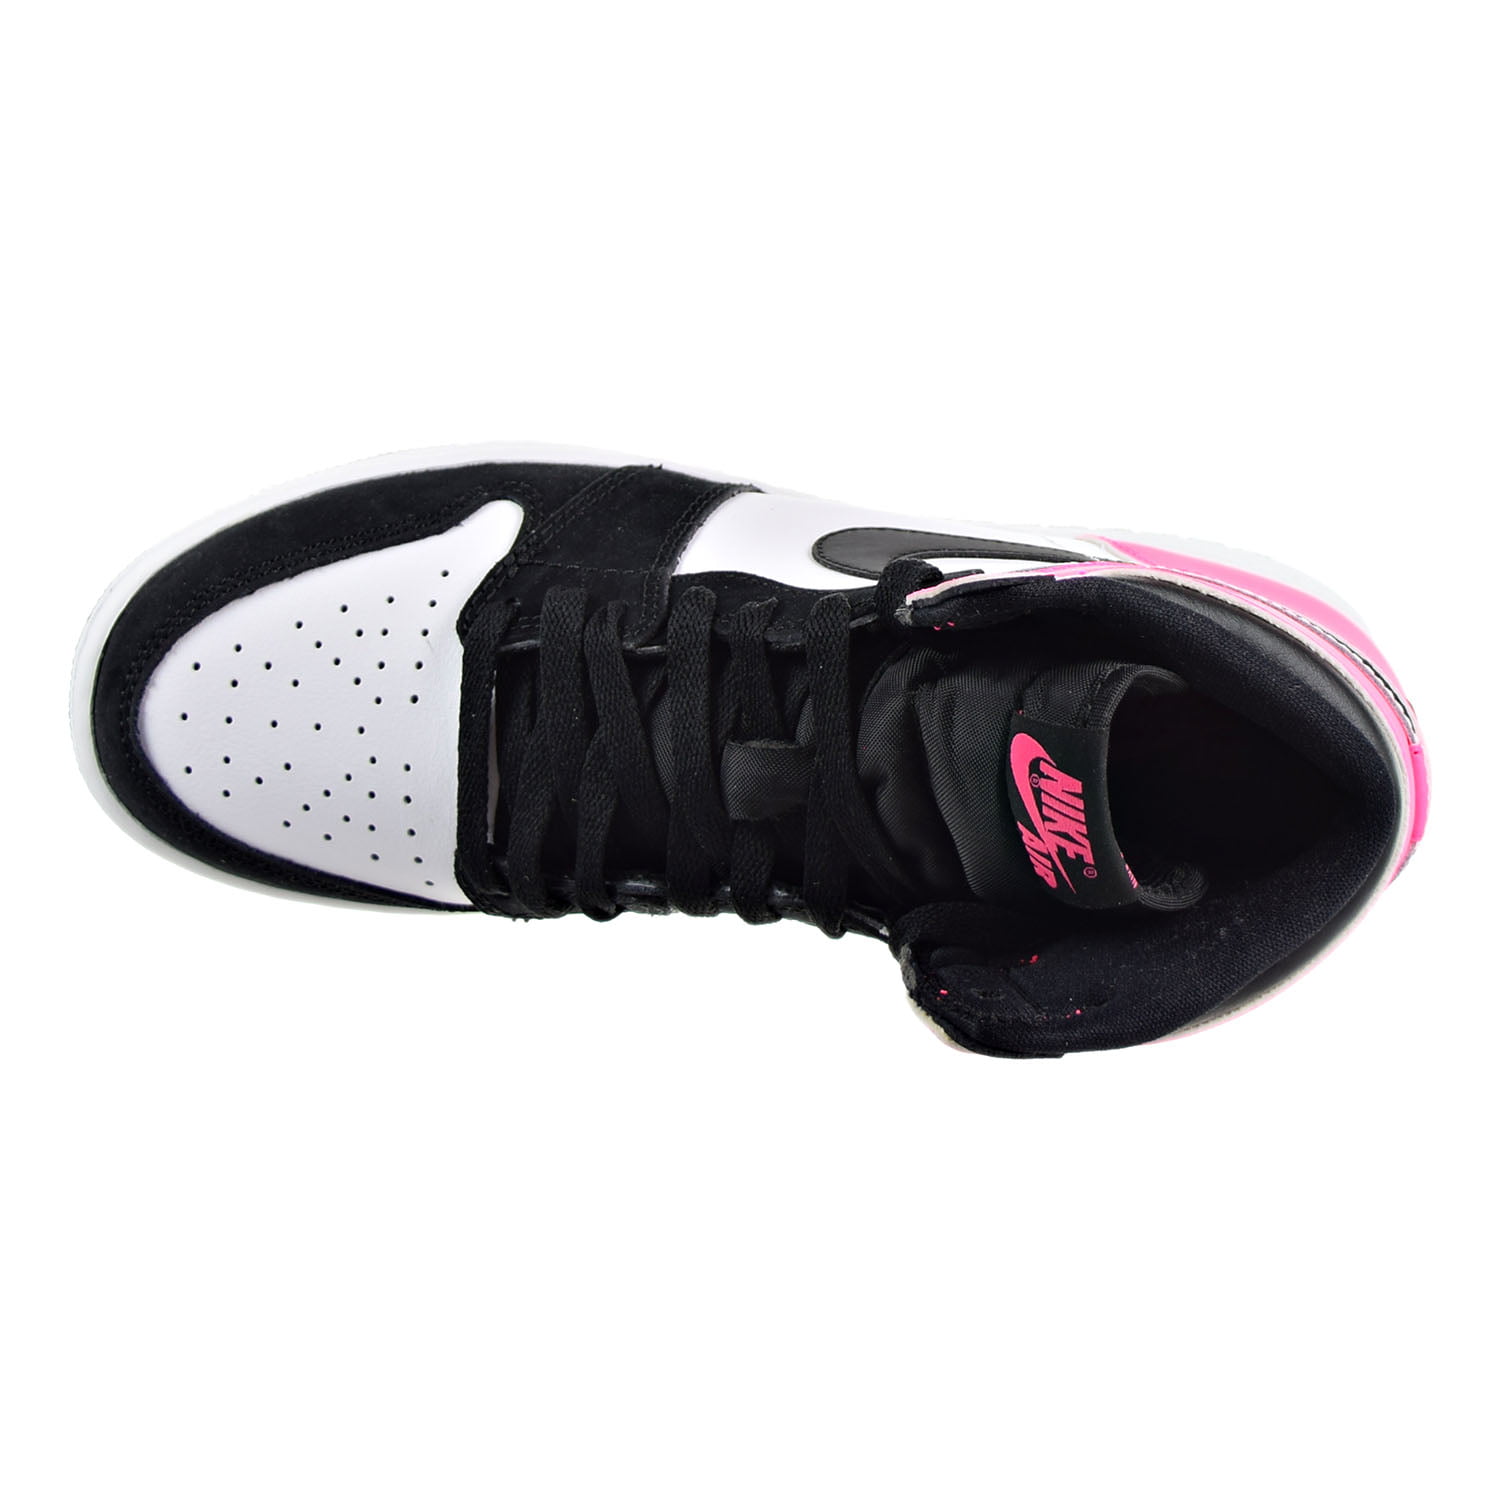 Air Jordan 1 Retro High OG Boys Shoes Black/Hyper-Pink/White 881426-009 